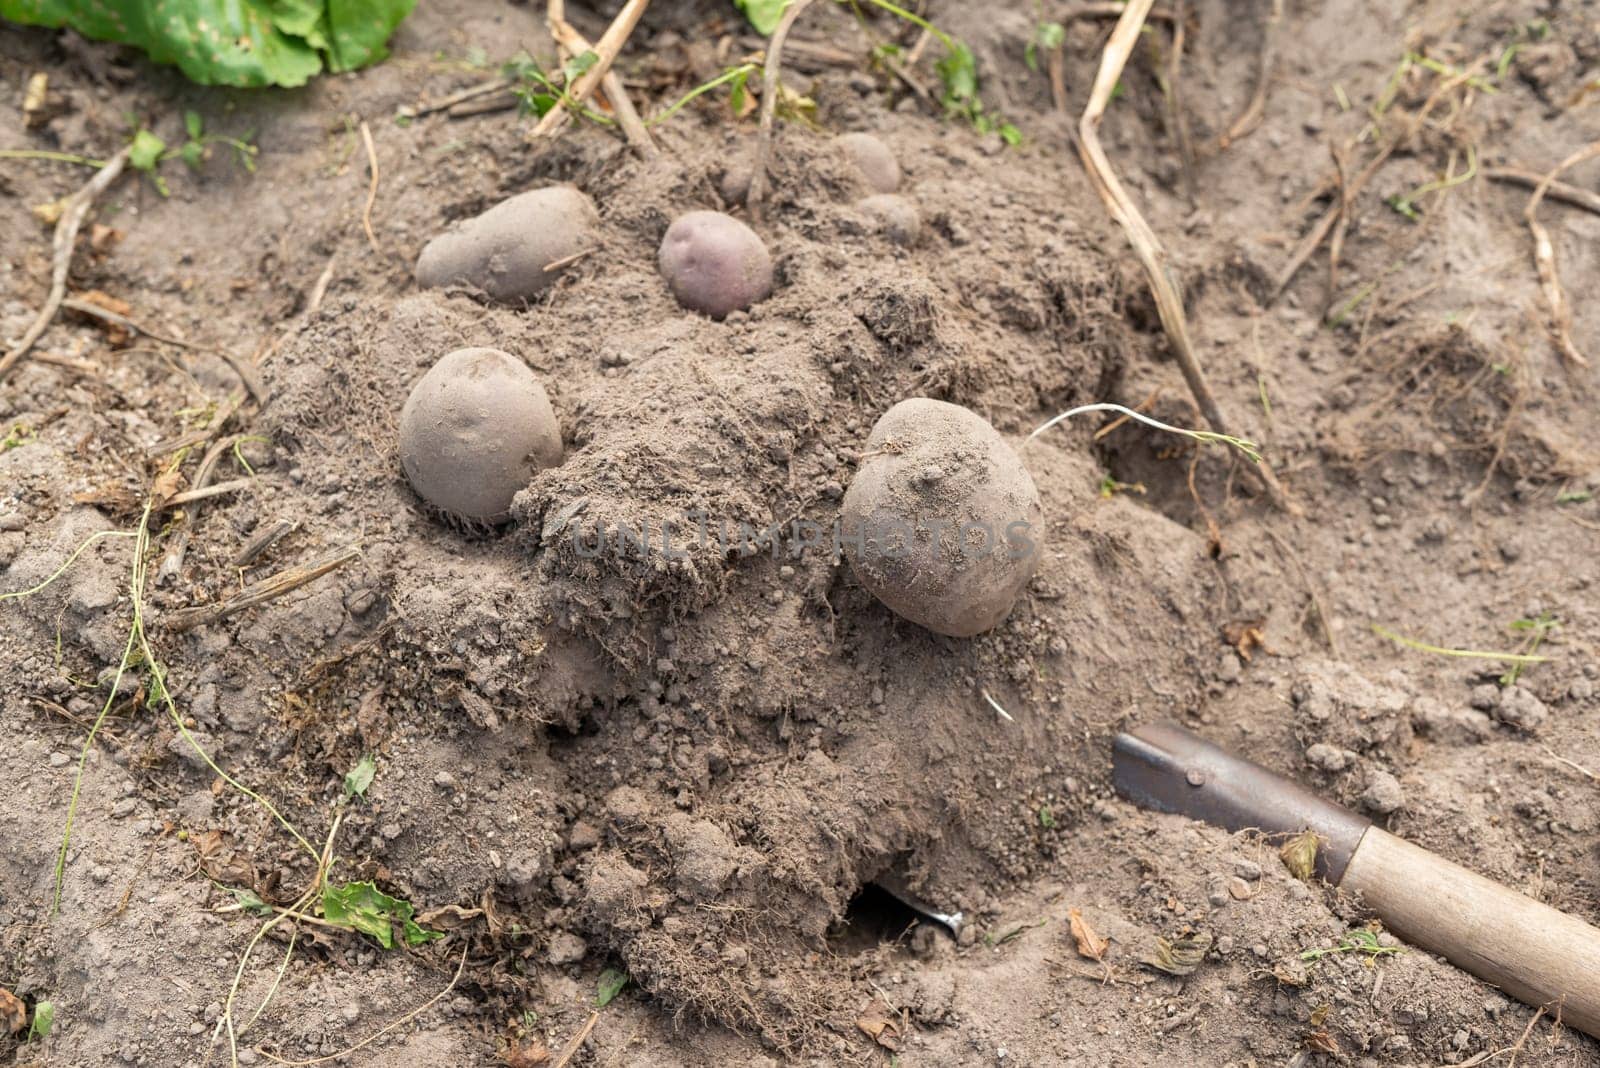 Potato harvest, big potatoes in ground